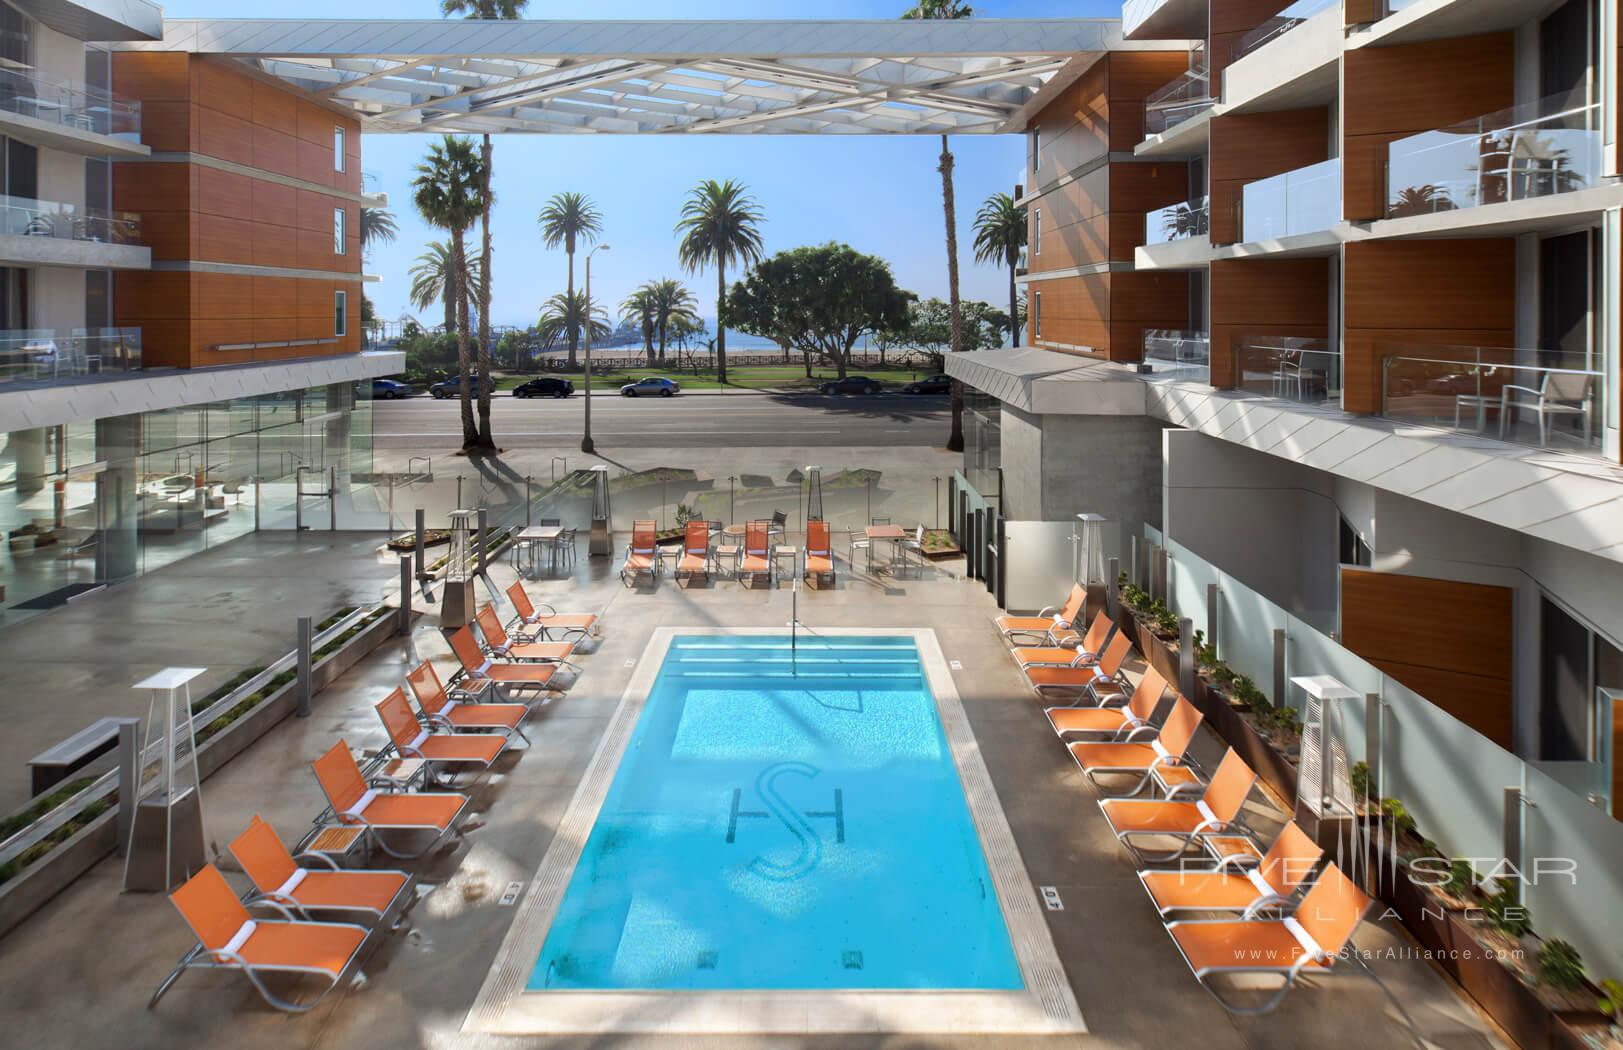 Outdoor Pool at Shore Hotel Santa Monica, United States